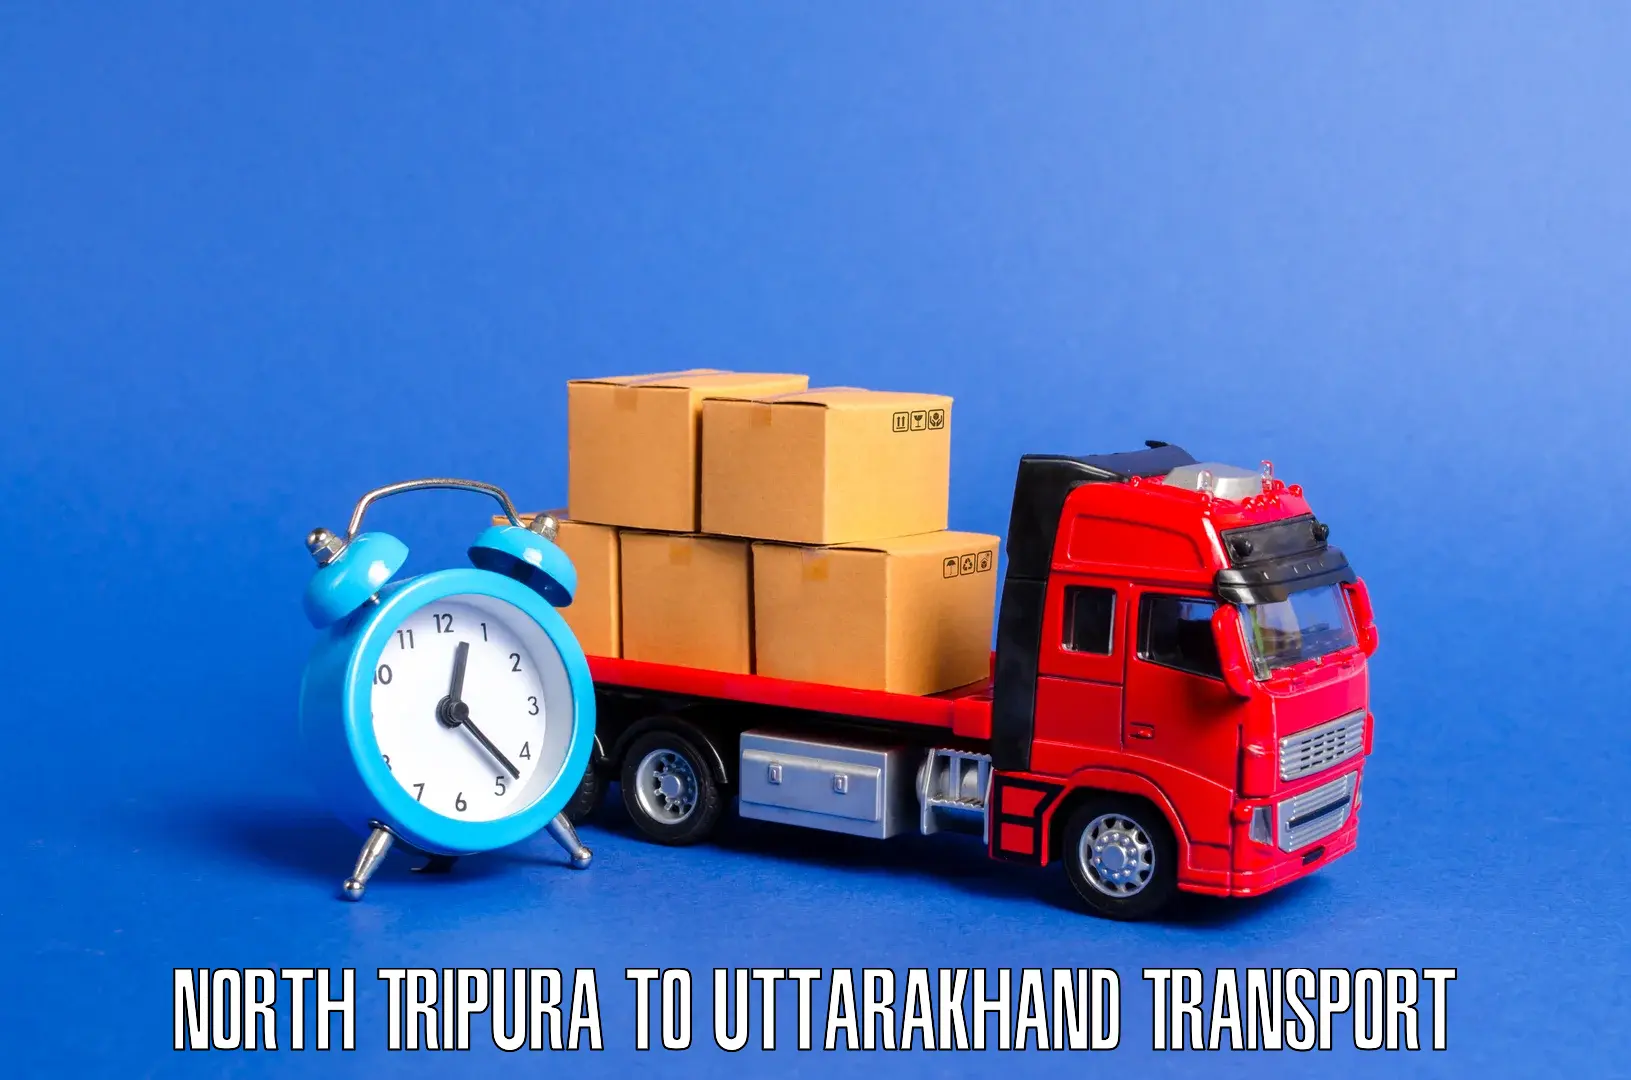 Nearby transport service North Tripura to Karnaprayag